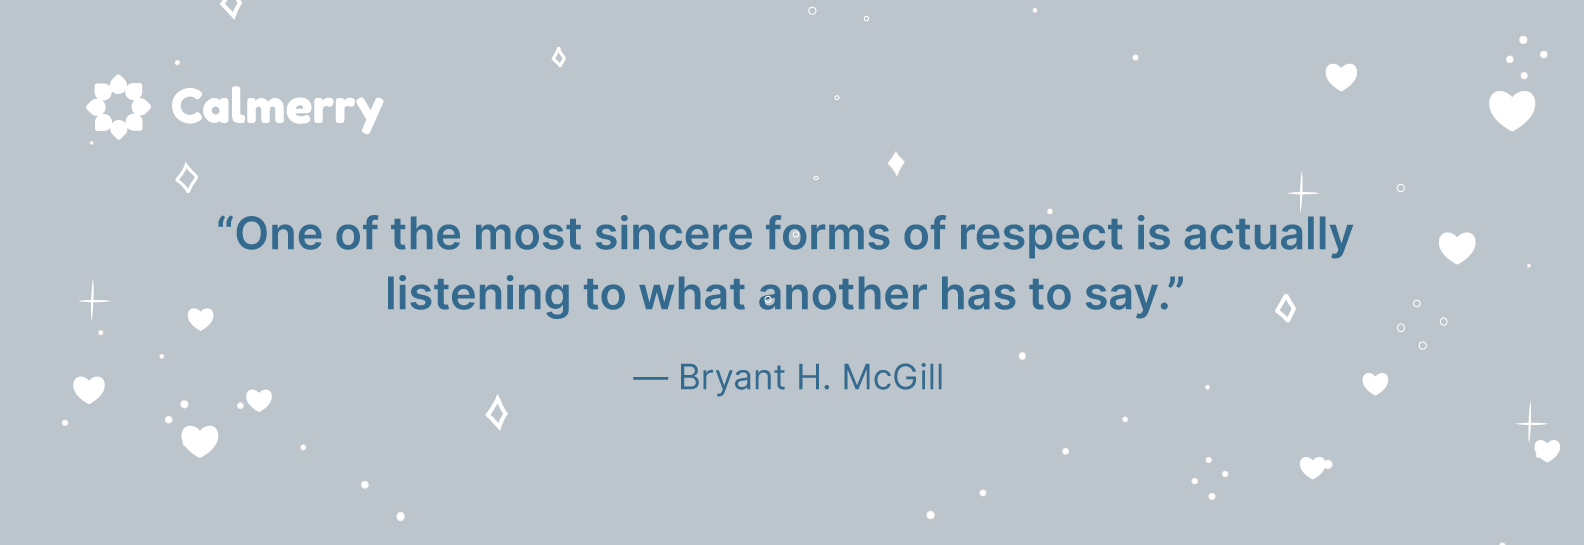 Bryant H. McGill quote